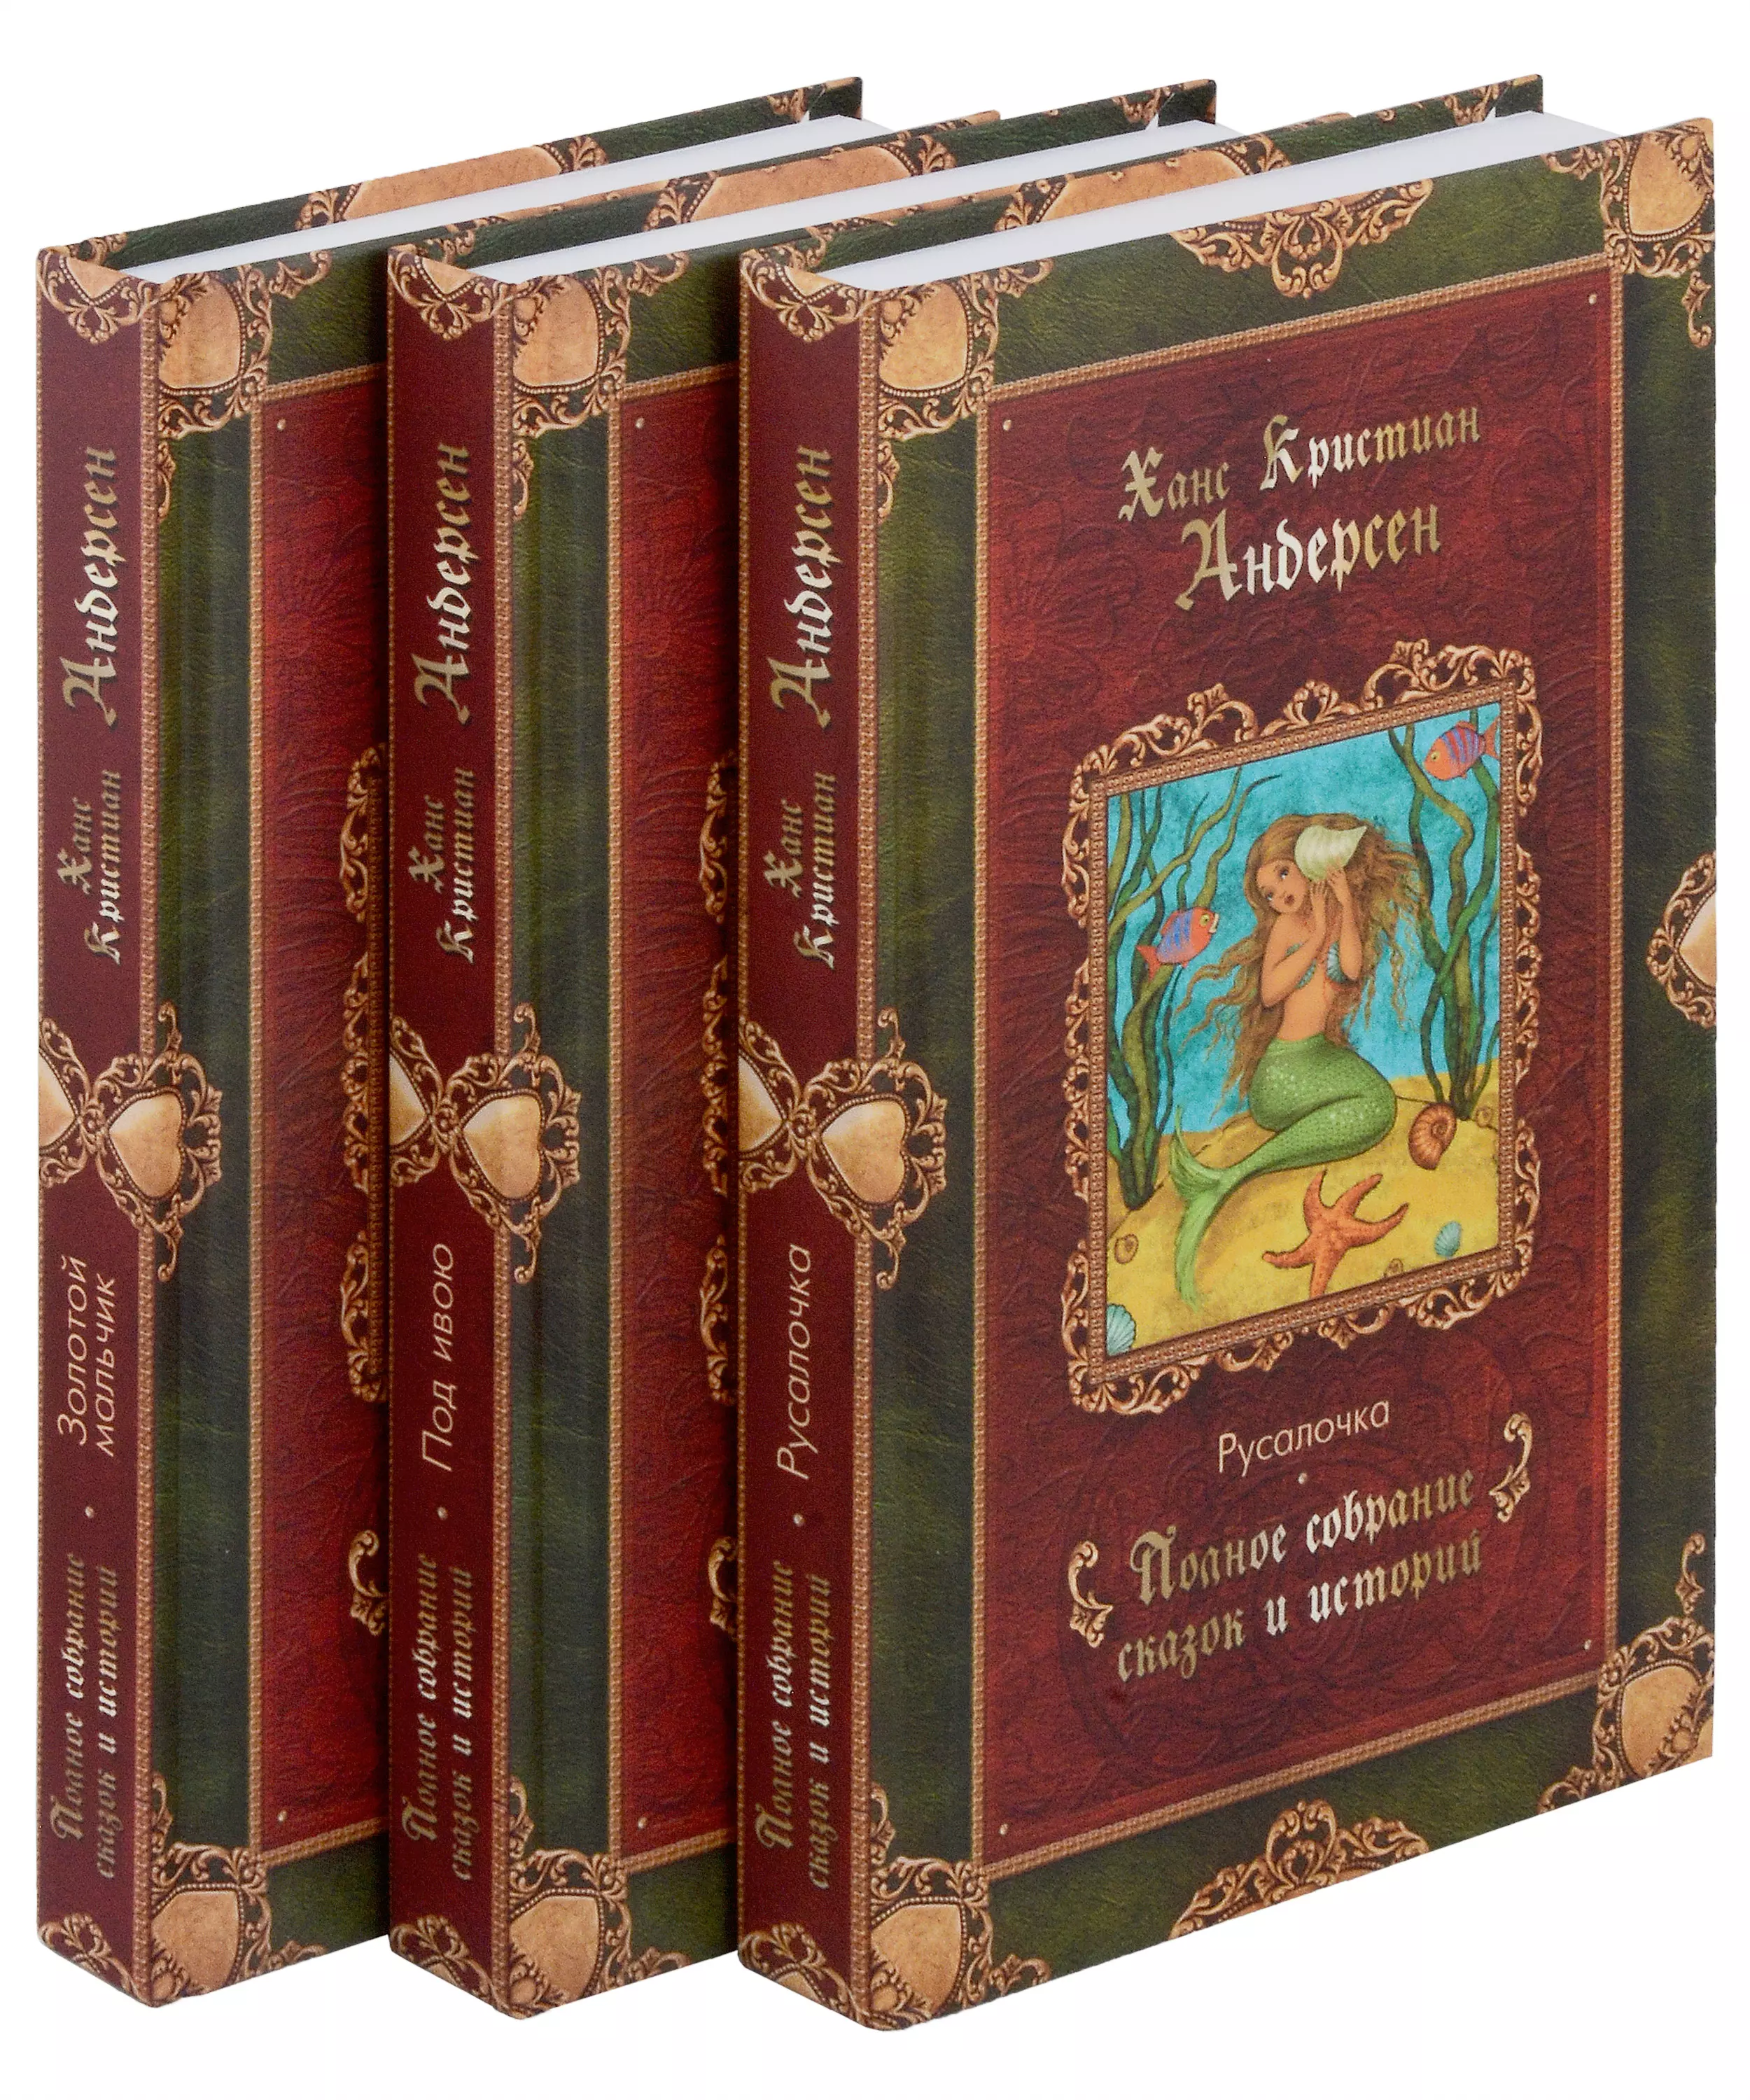 Андерсен Ганс Христиан - Сказки (комплект из 3 книг)